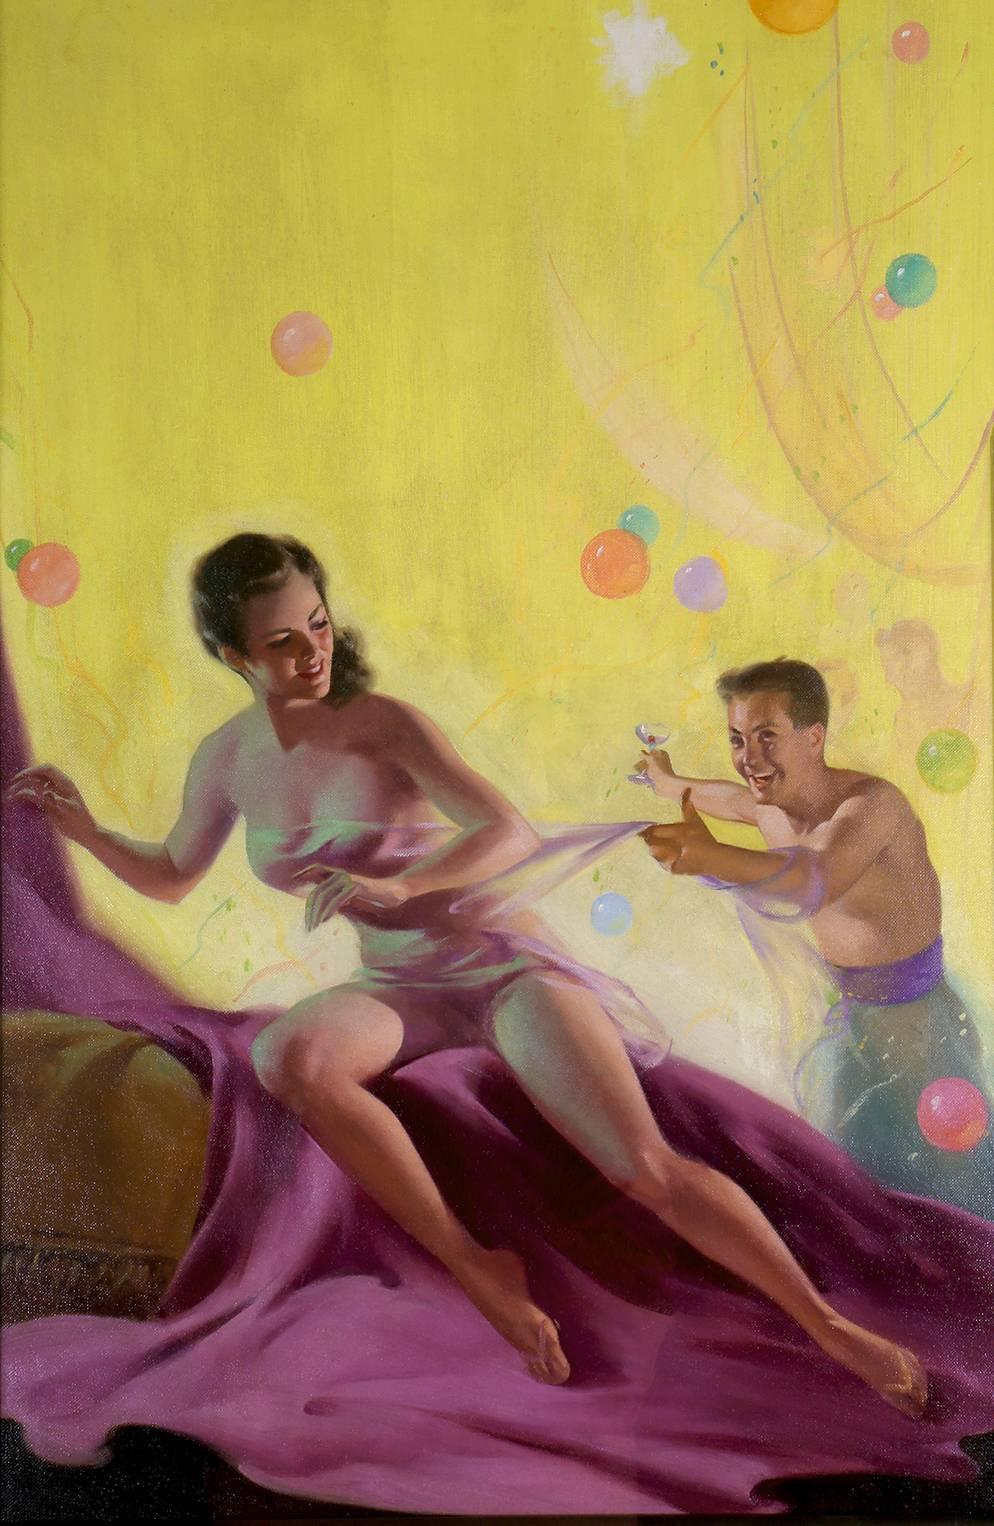 Harold McCauley Nude Painting - Carnival of Lust